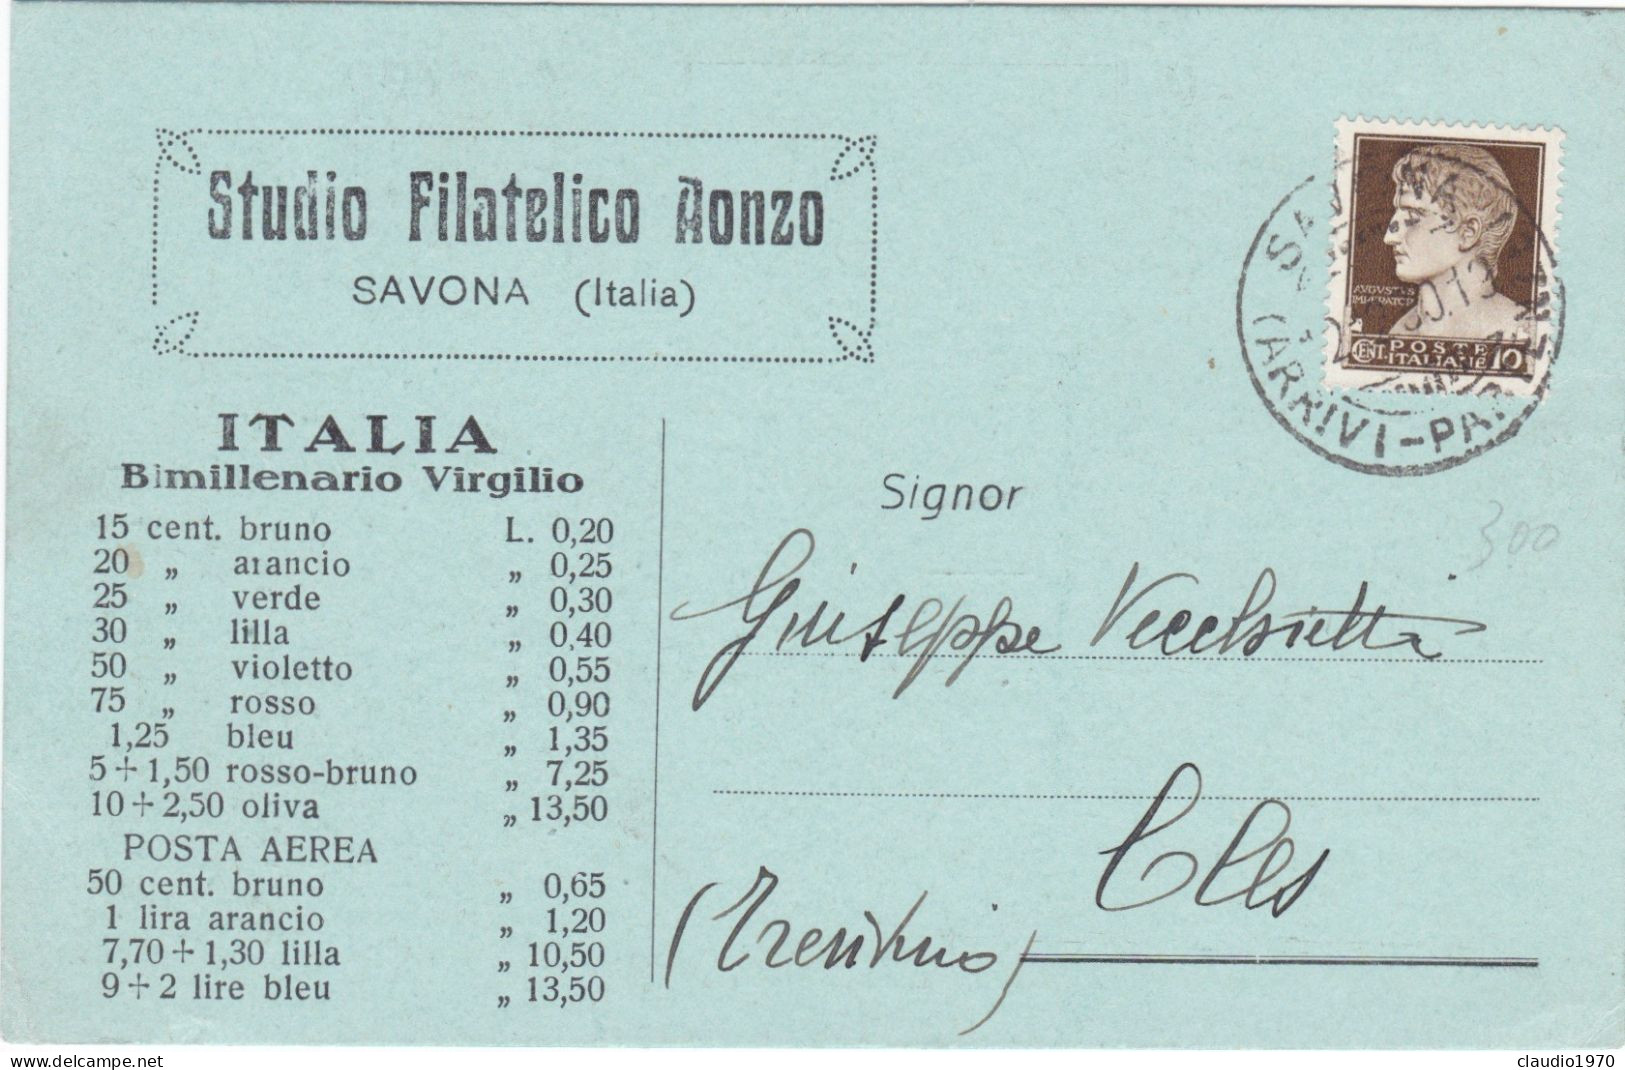 REGNO - ITALIA - SAVONA - STUDIO FILATELICO AONZO -STORIA POSTALE - CARTOLINA - VIAGGIATA PER CLES (TRENTO) 1930 - Storia Postale